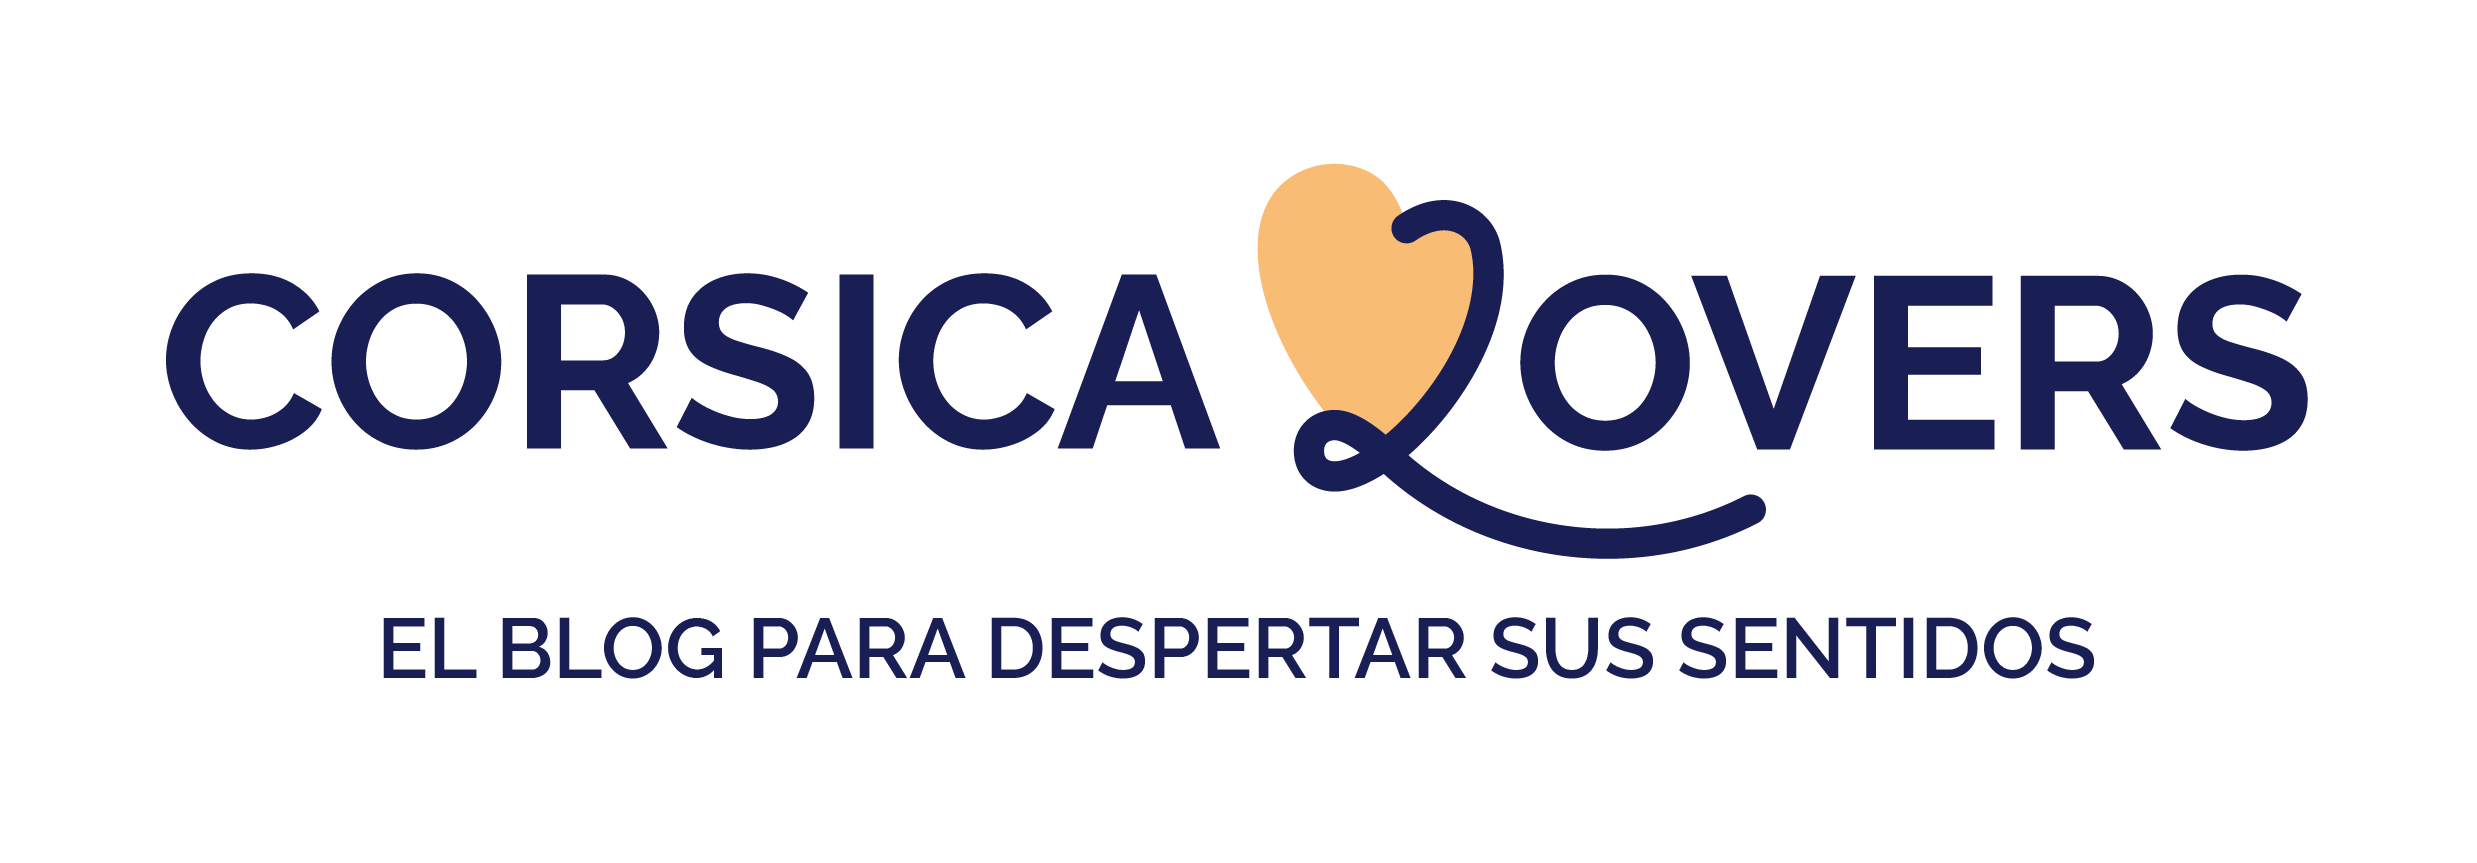 Blog Corsica Lovers Logo ES